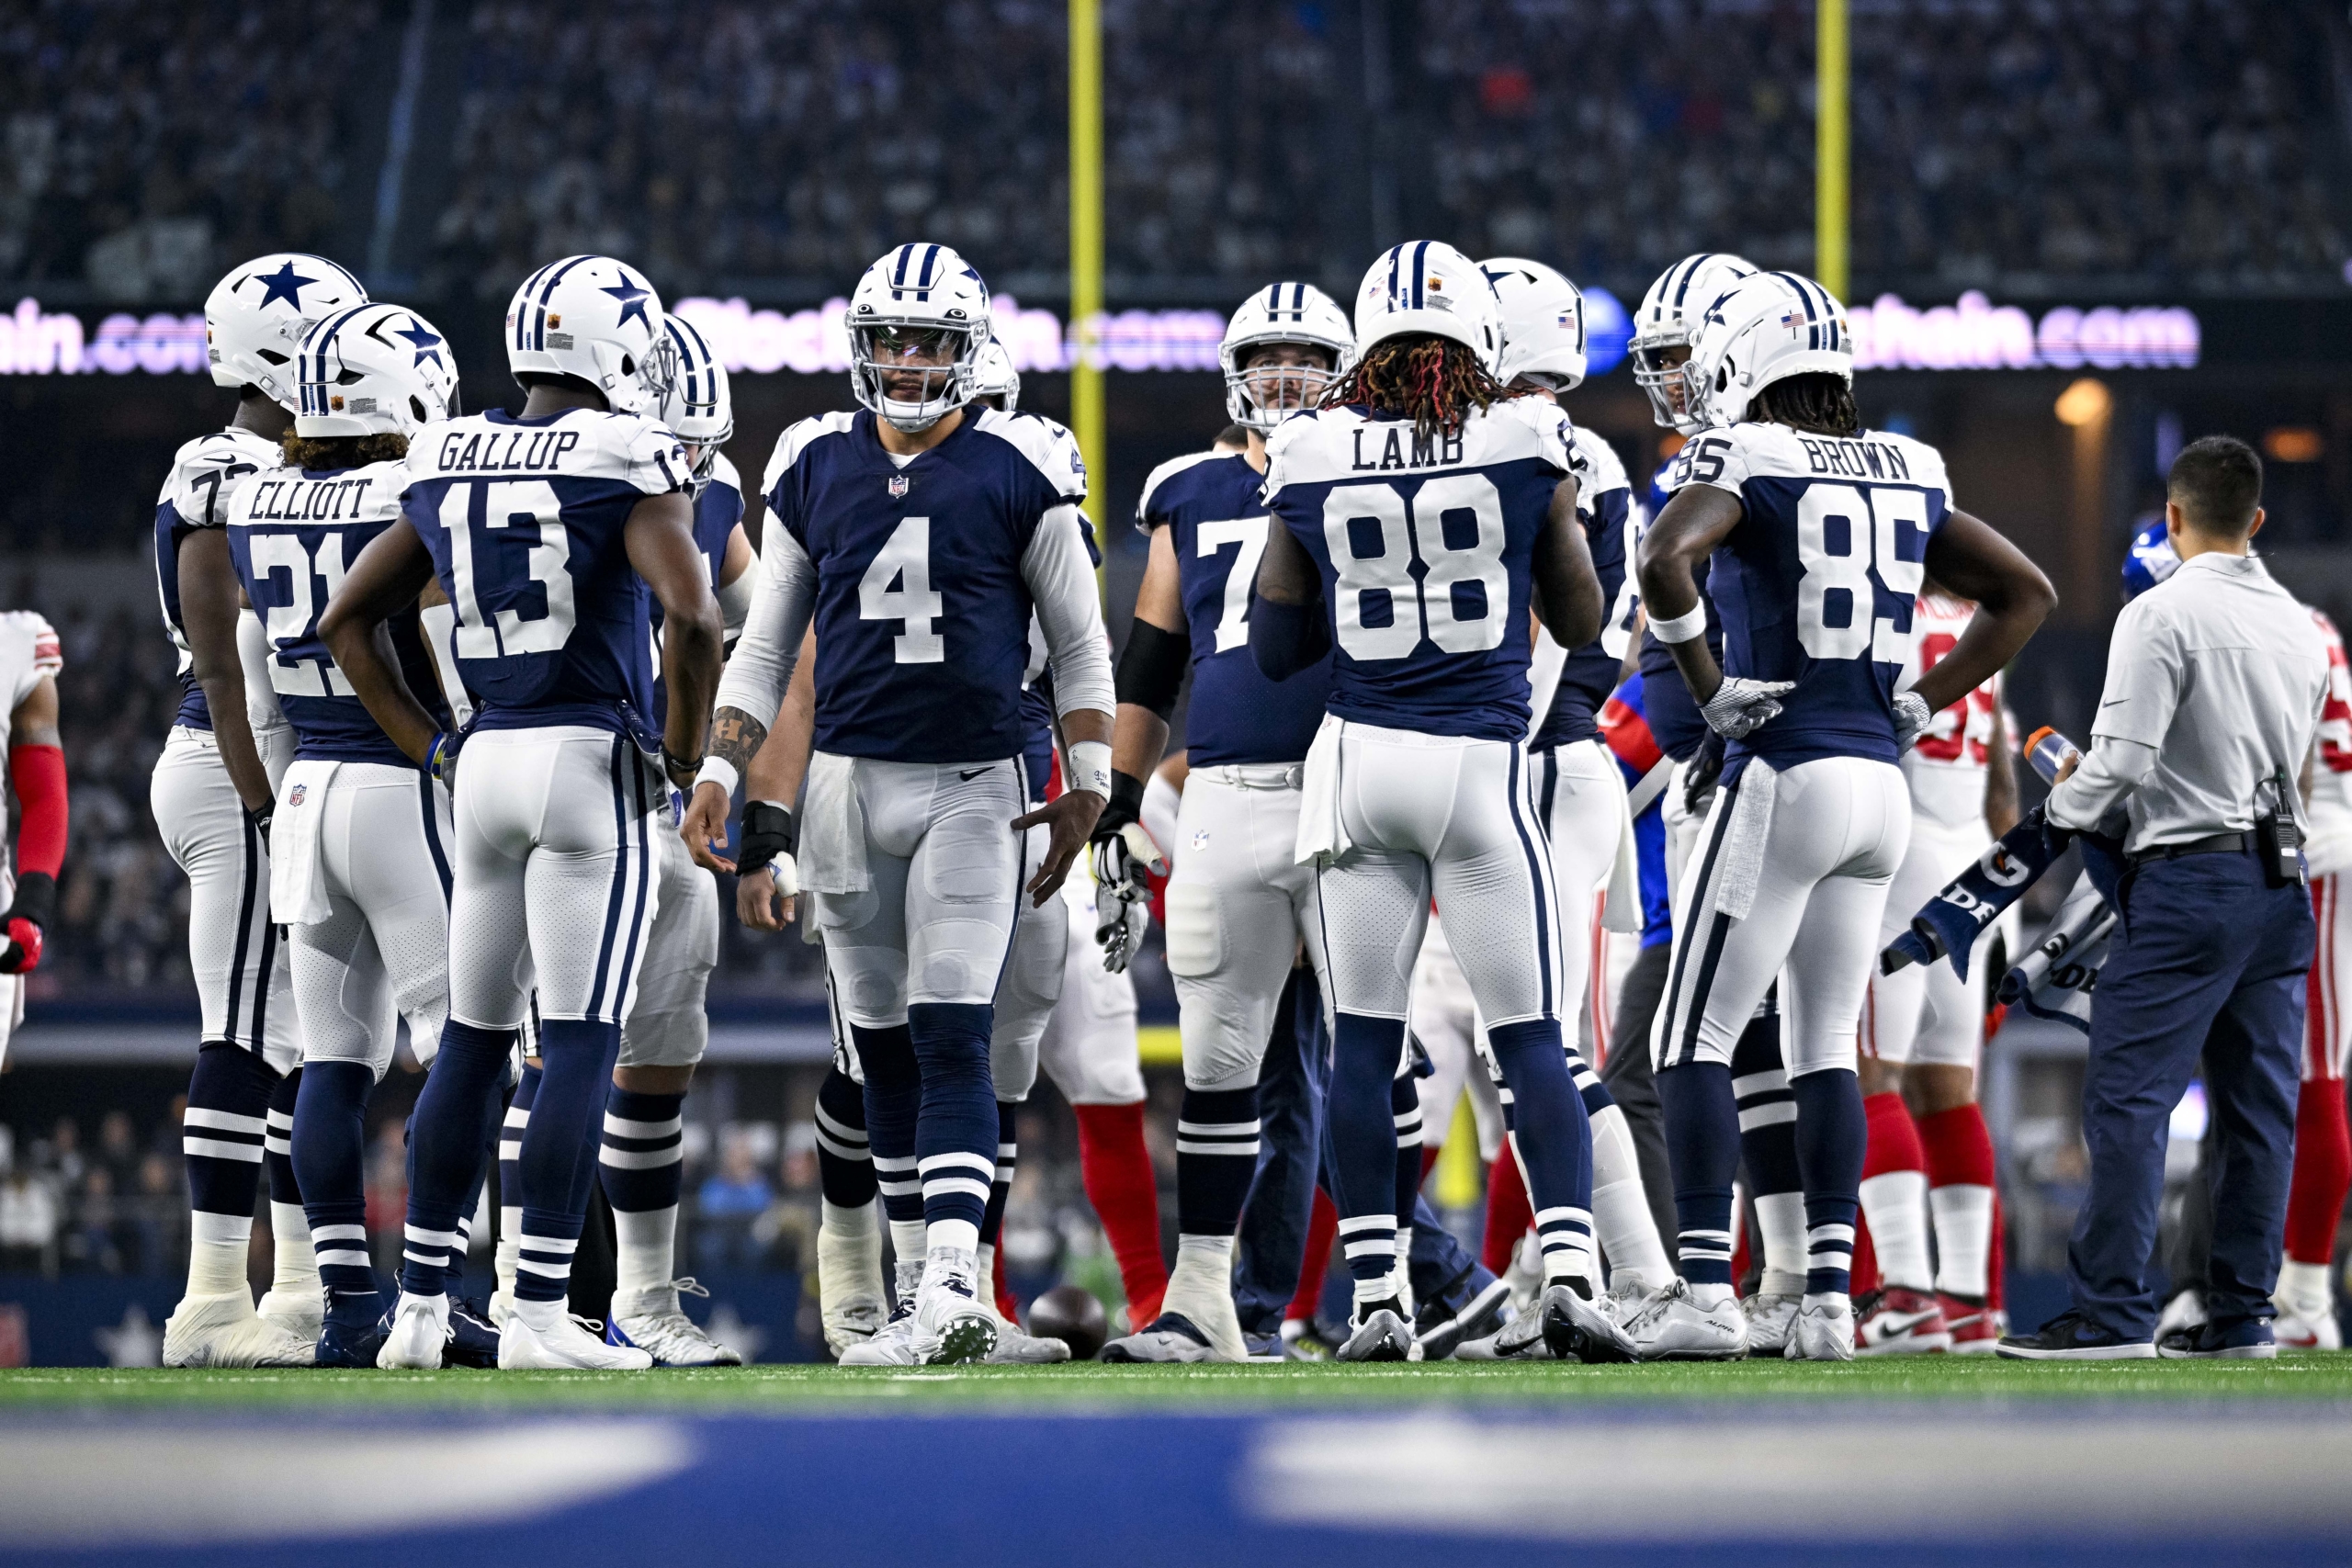 New York Giants vs Dallas Cowboys game sets NFL regular-season viewership record